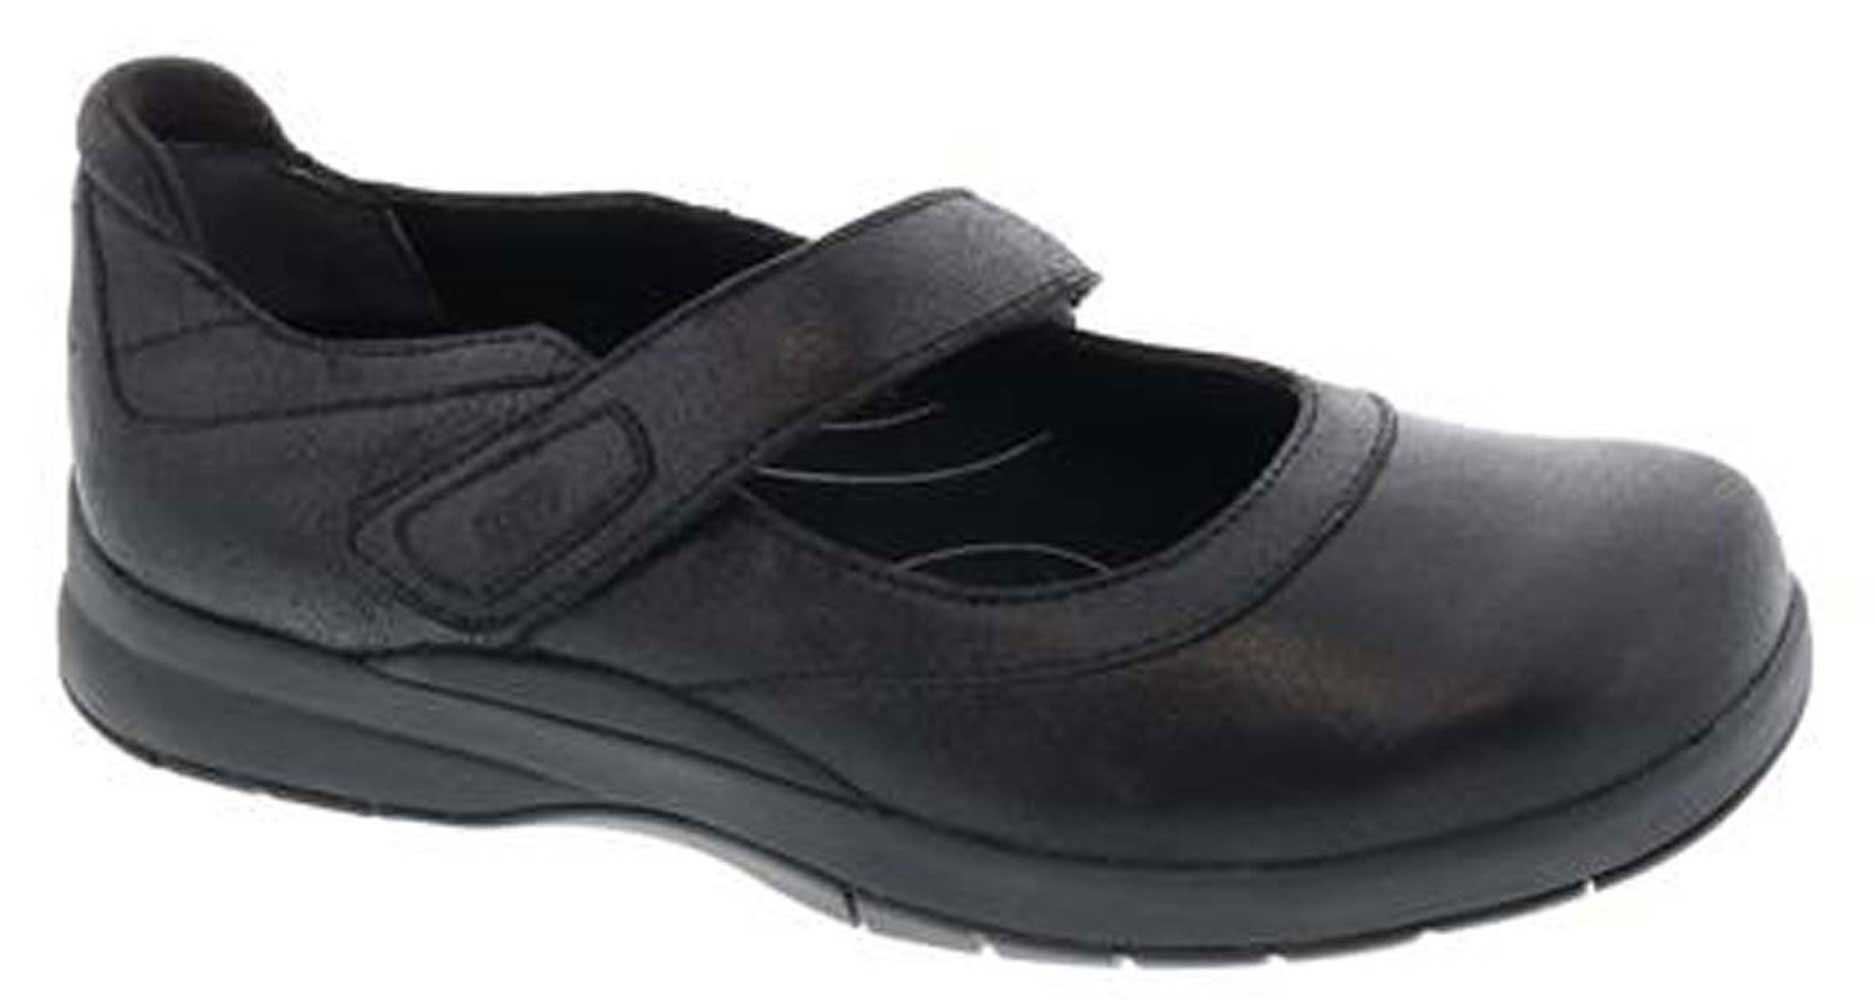 Drew Shoes Endeavor 14800 - Women's Casual Comfort Therapeutic Diabetic Shoe - Extra Depth For Orthotics